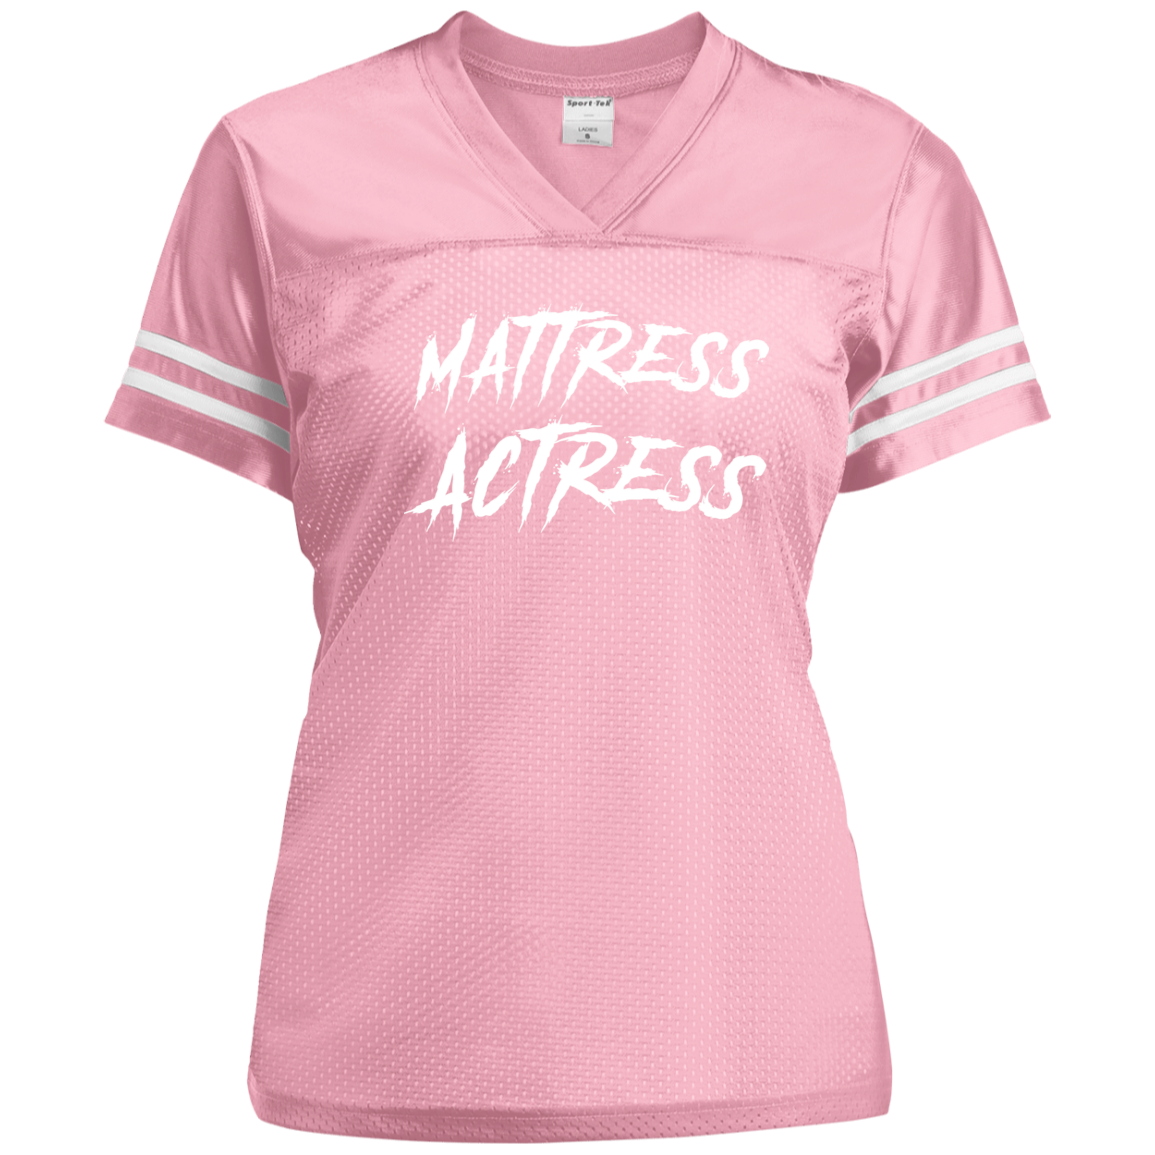 "Mattress Actress" Ladies' Replica Jersey